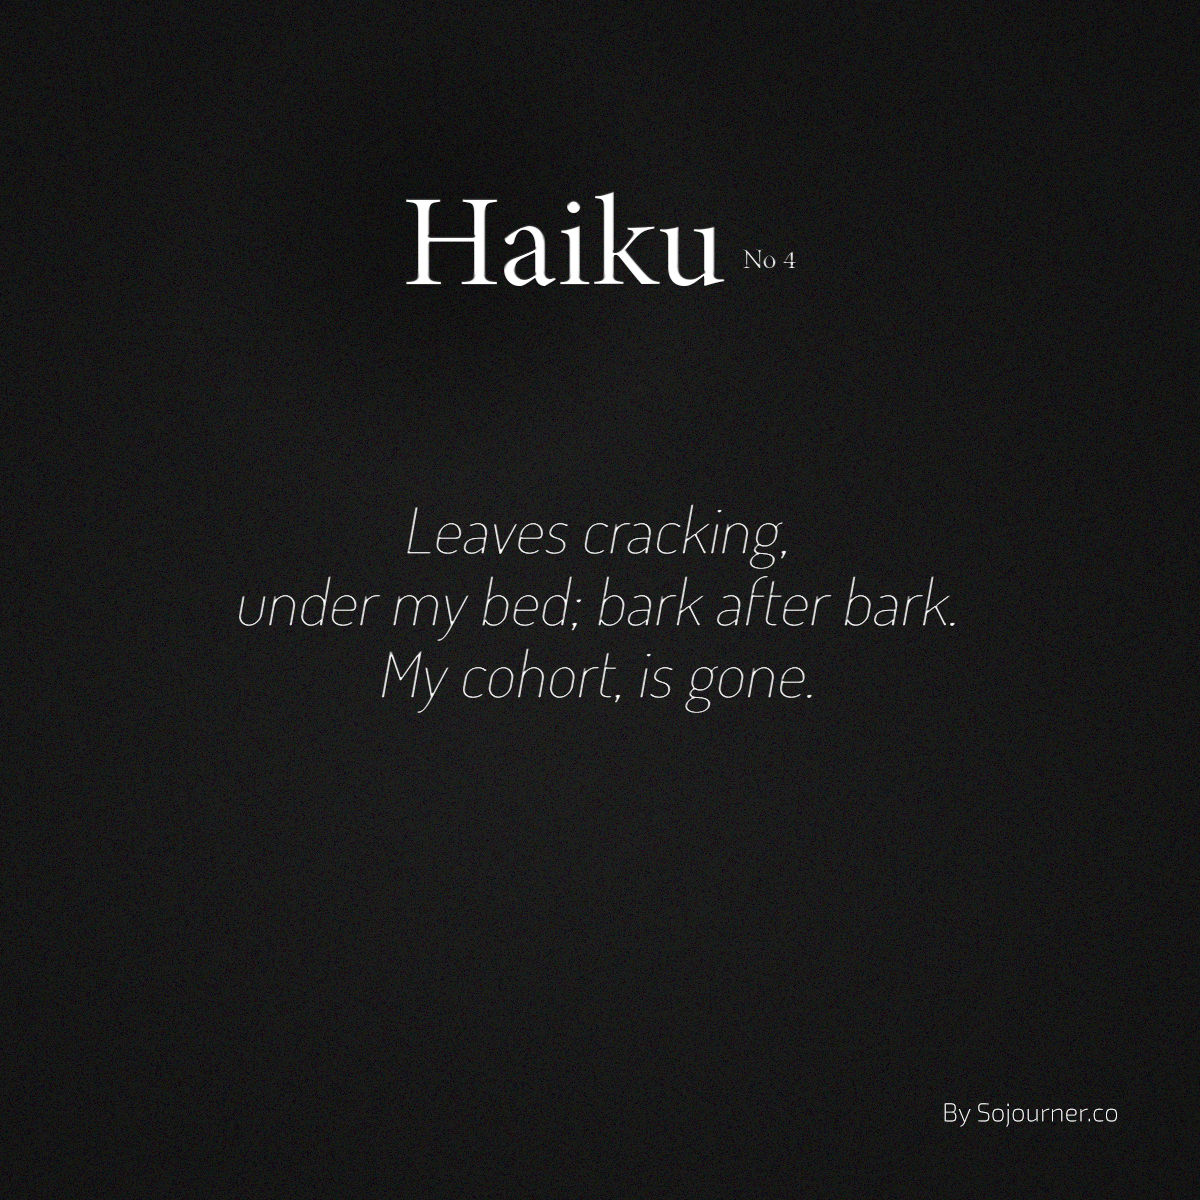 Haiku No. 4 - A Farewell - By indefiniteloop.com